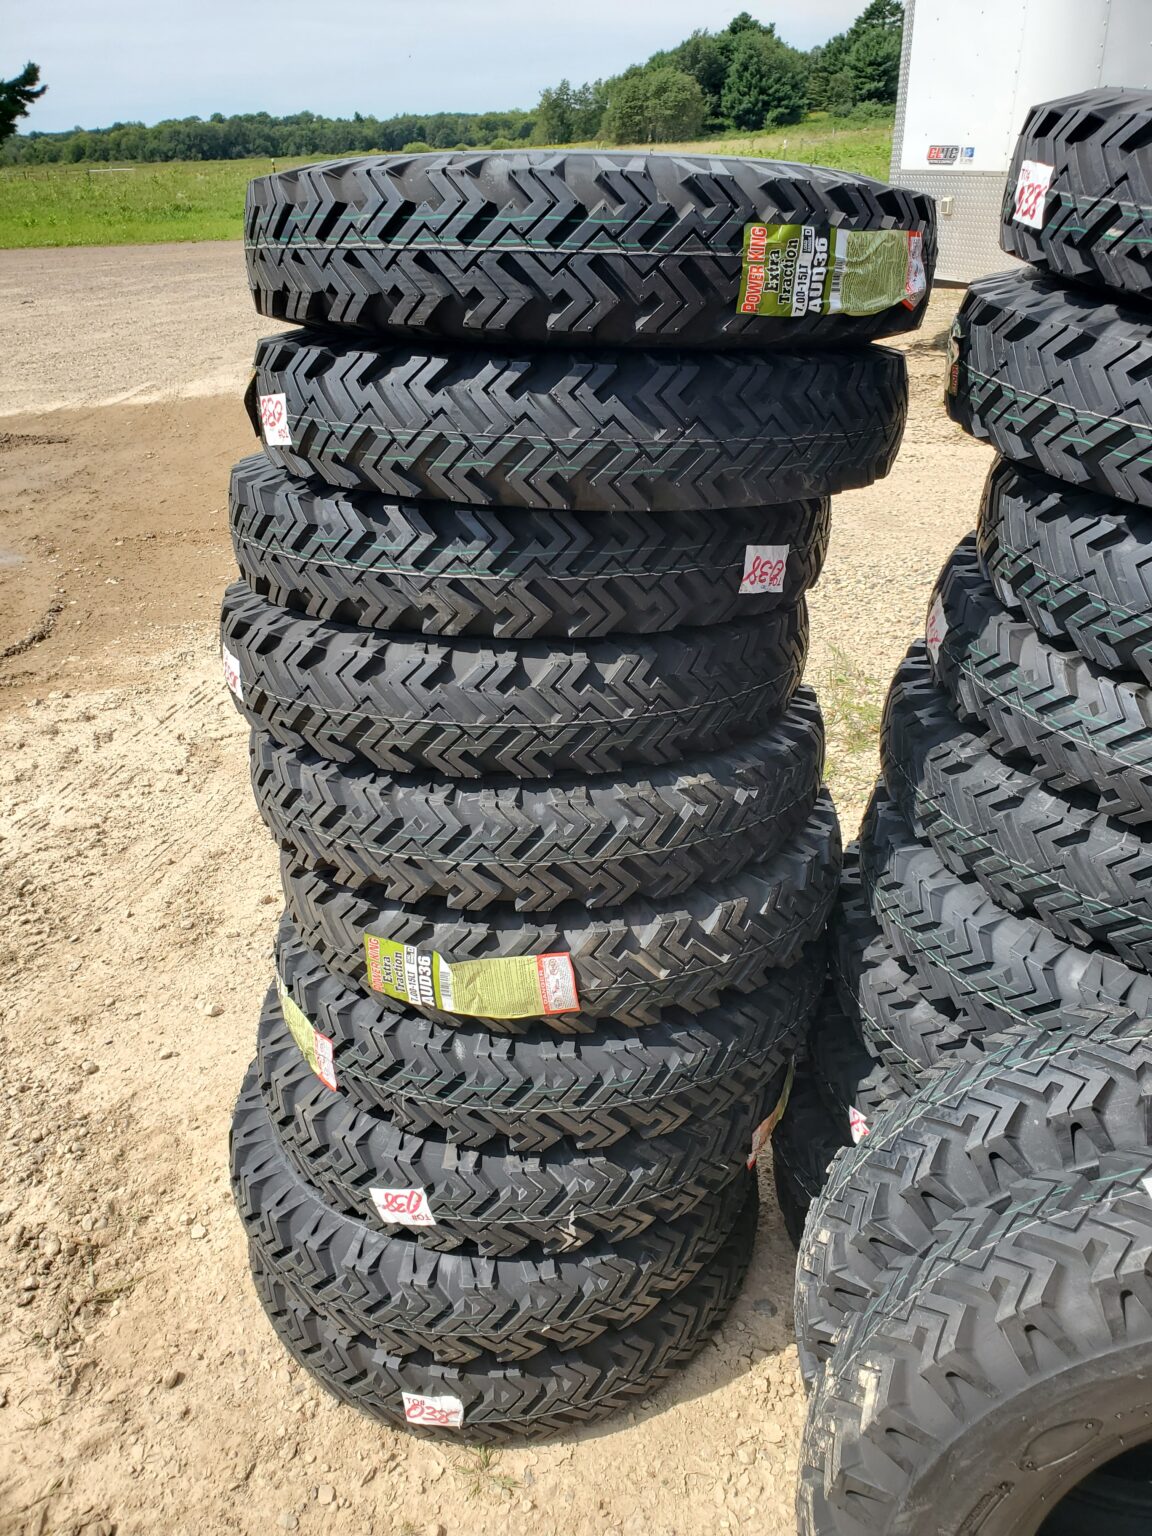 22 inch snow tires